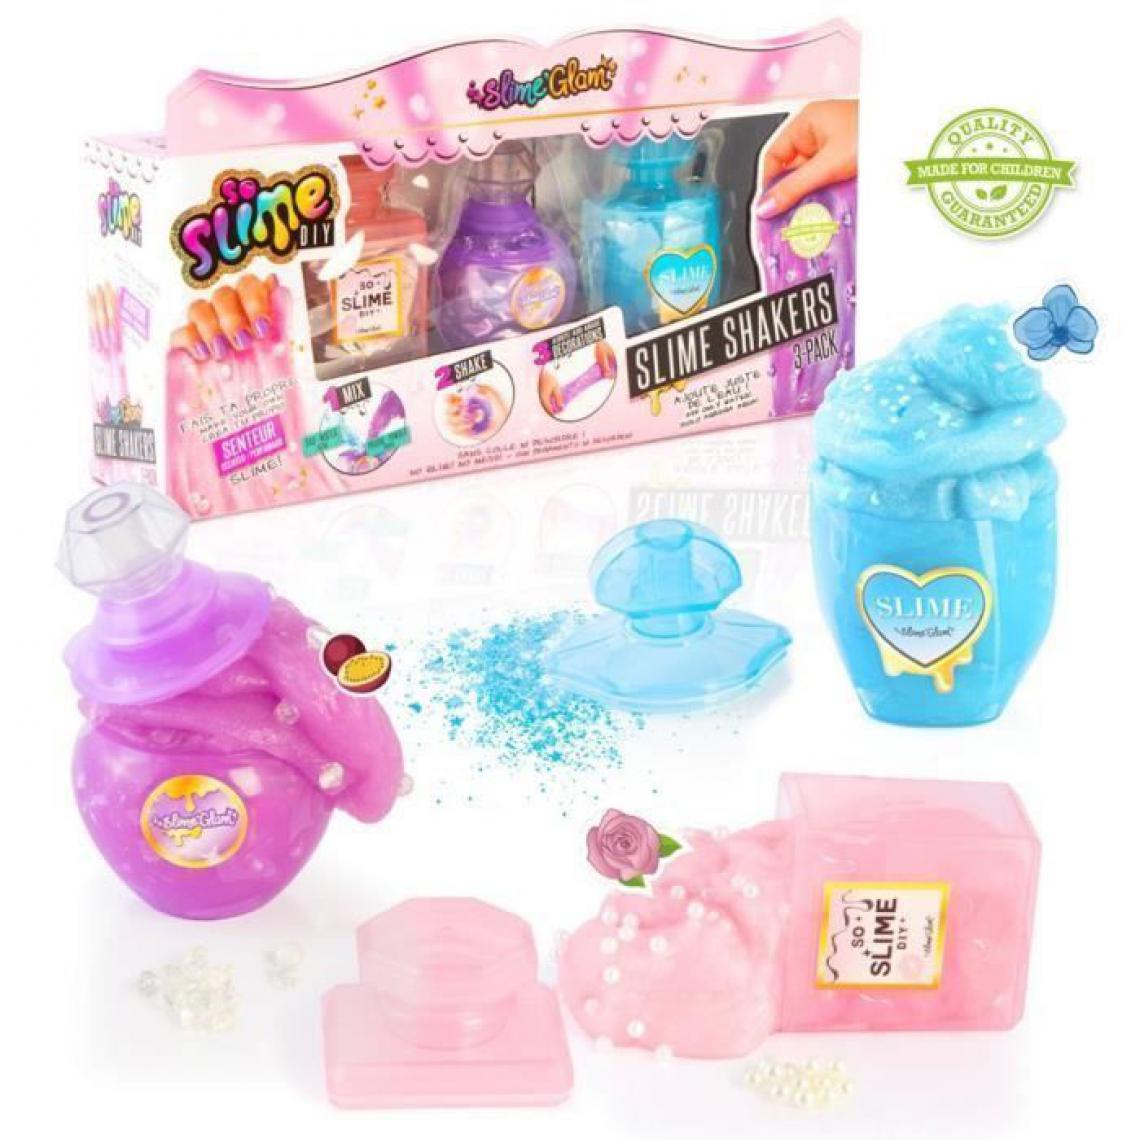 Canal Toys - SLIMEGLAM DIY Kit de slime parfumee a creer soi-meme - SSC 090 - Lot de 3 shakers parfums - Modelage